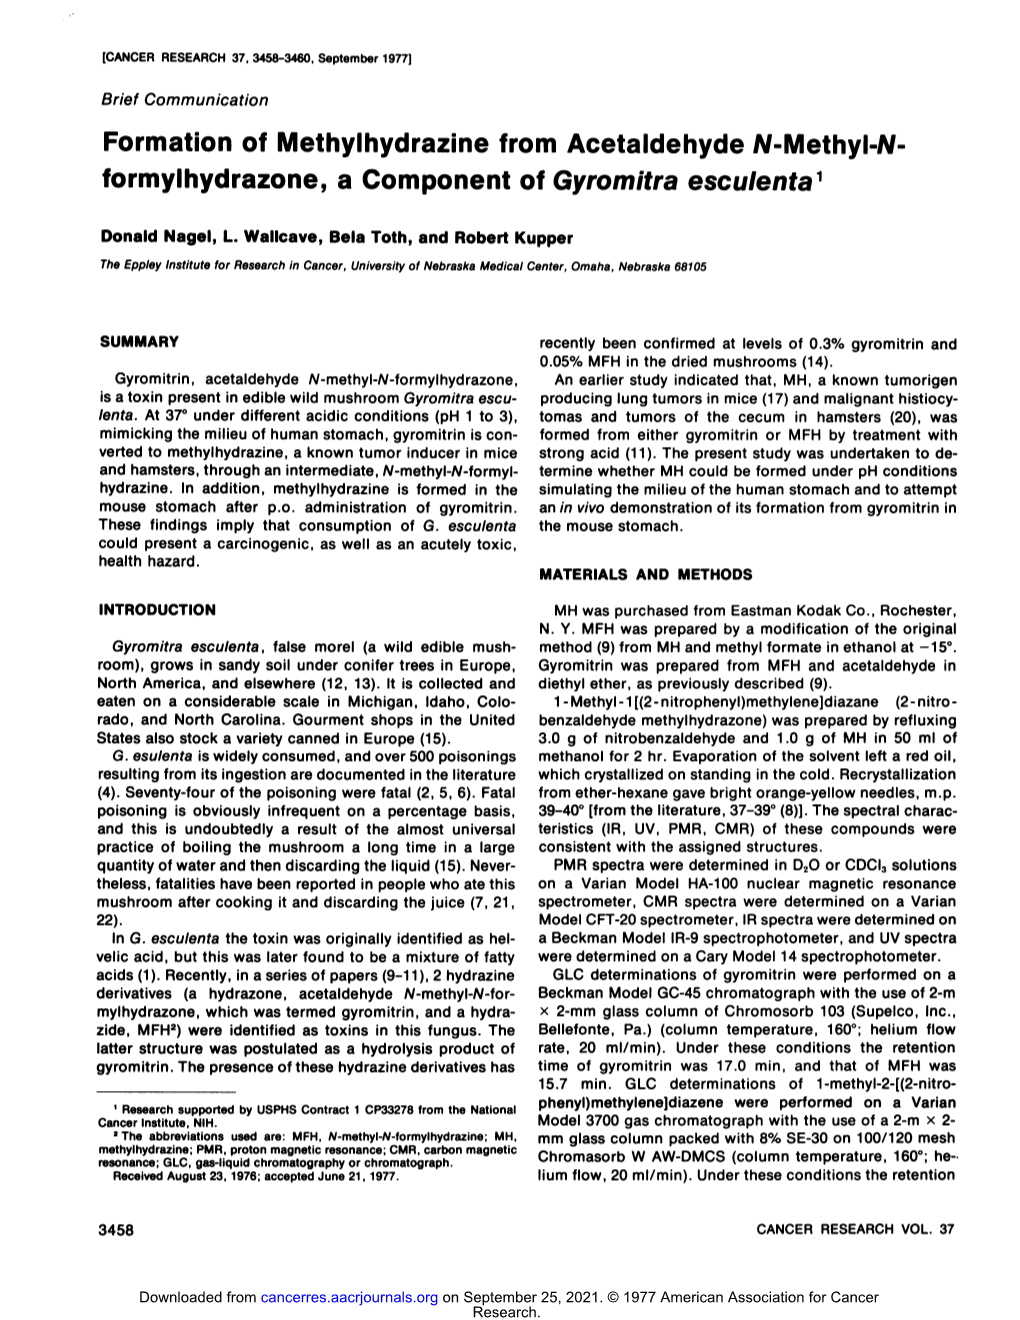 Formation of Methylhydrazine from Acetaldehyde /V-Methyl-A/- Formylhydrazone, a Component of Gyromitra Esculenta ^